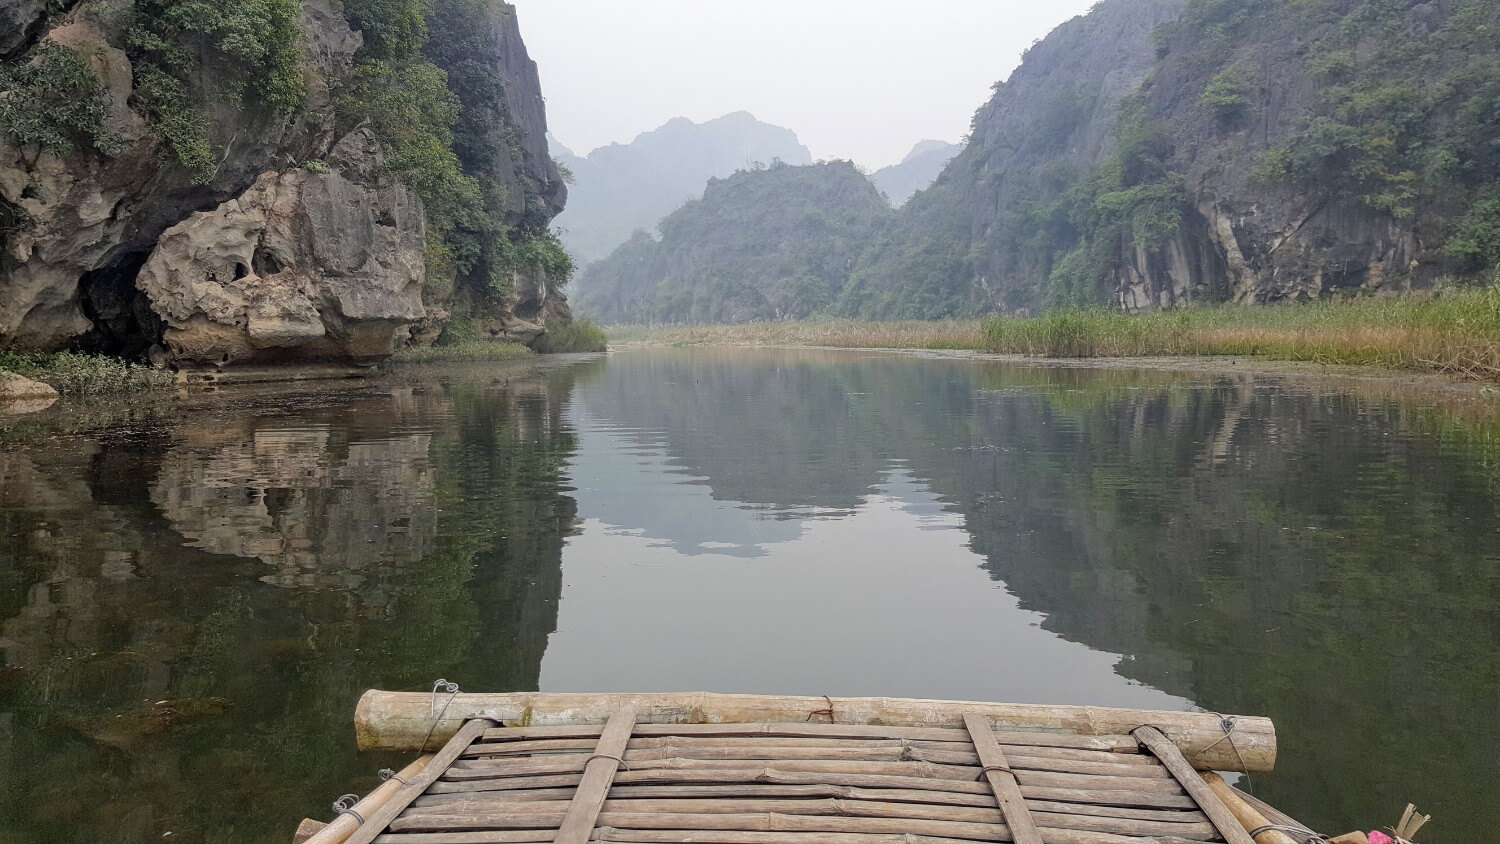 Balade sur l'eau à Vân Long